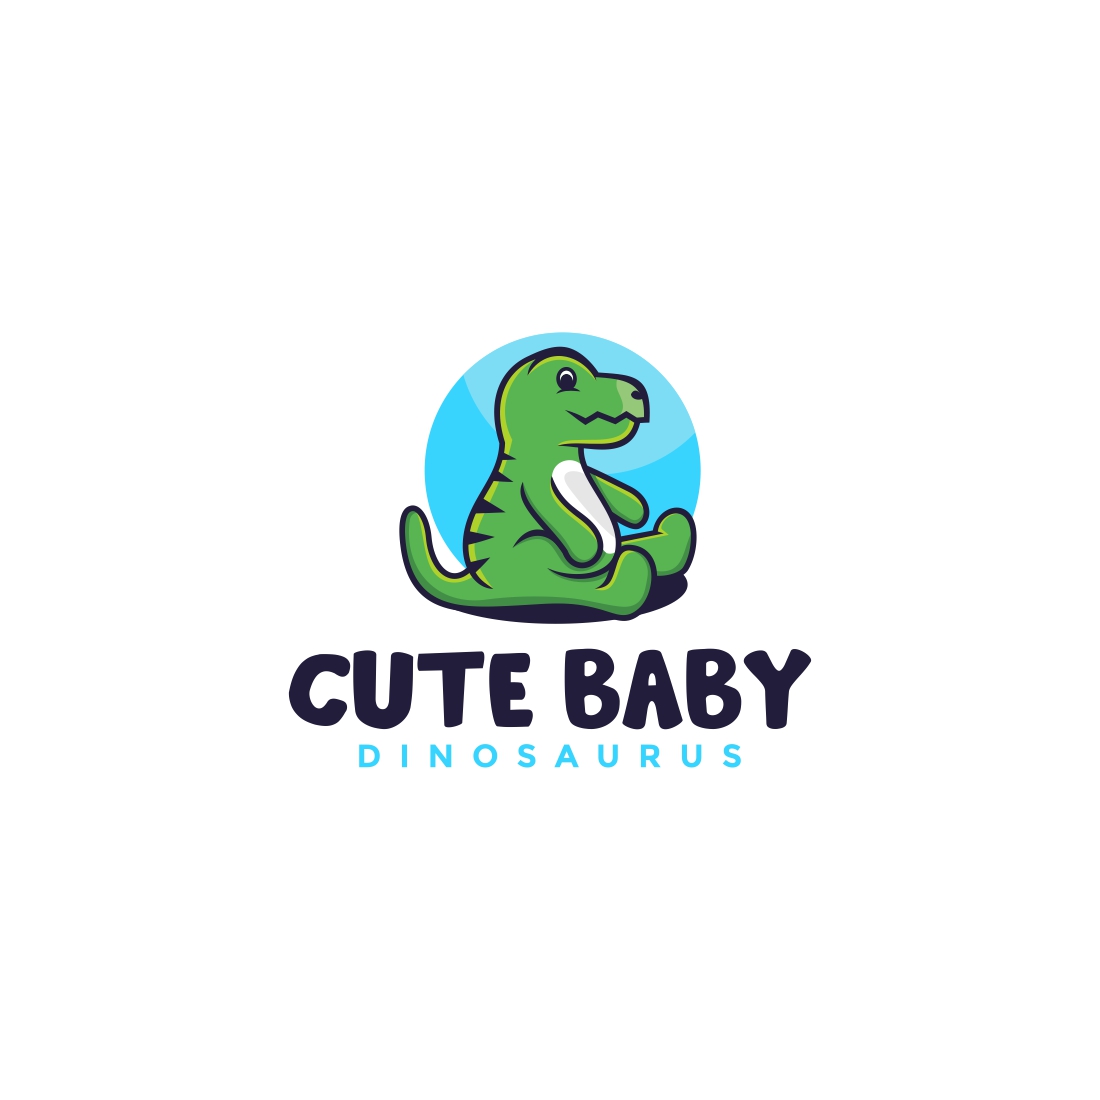 Dinosaur cute logo design cover image.